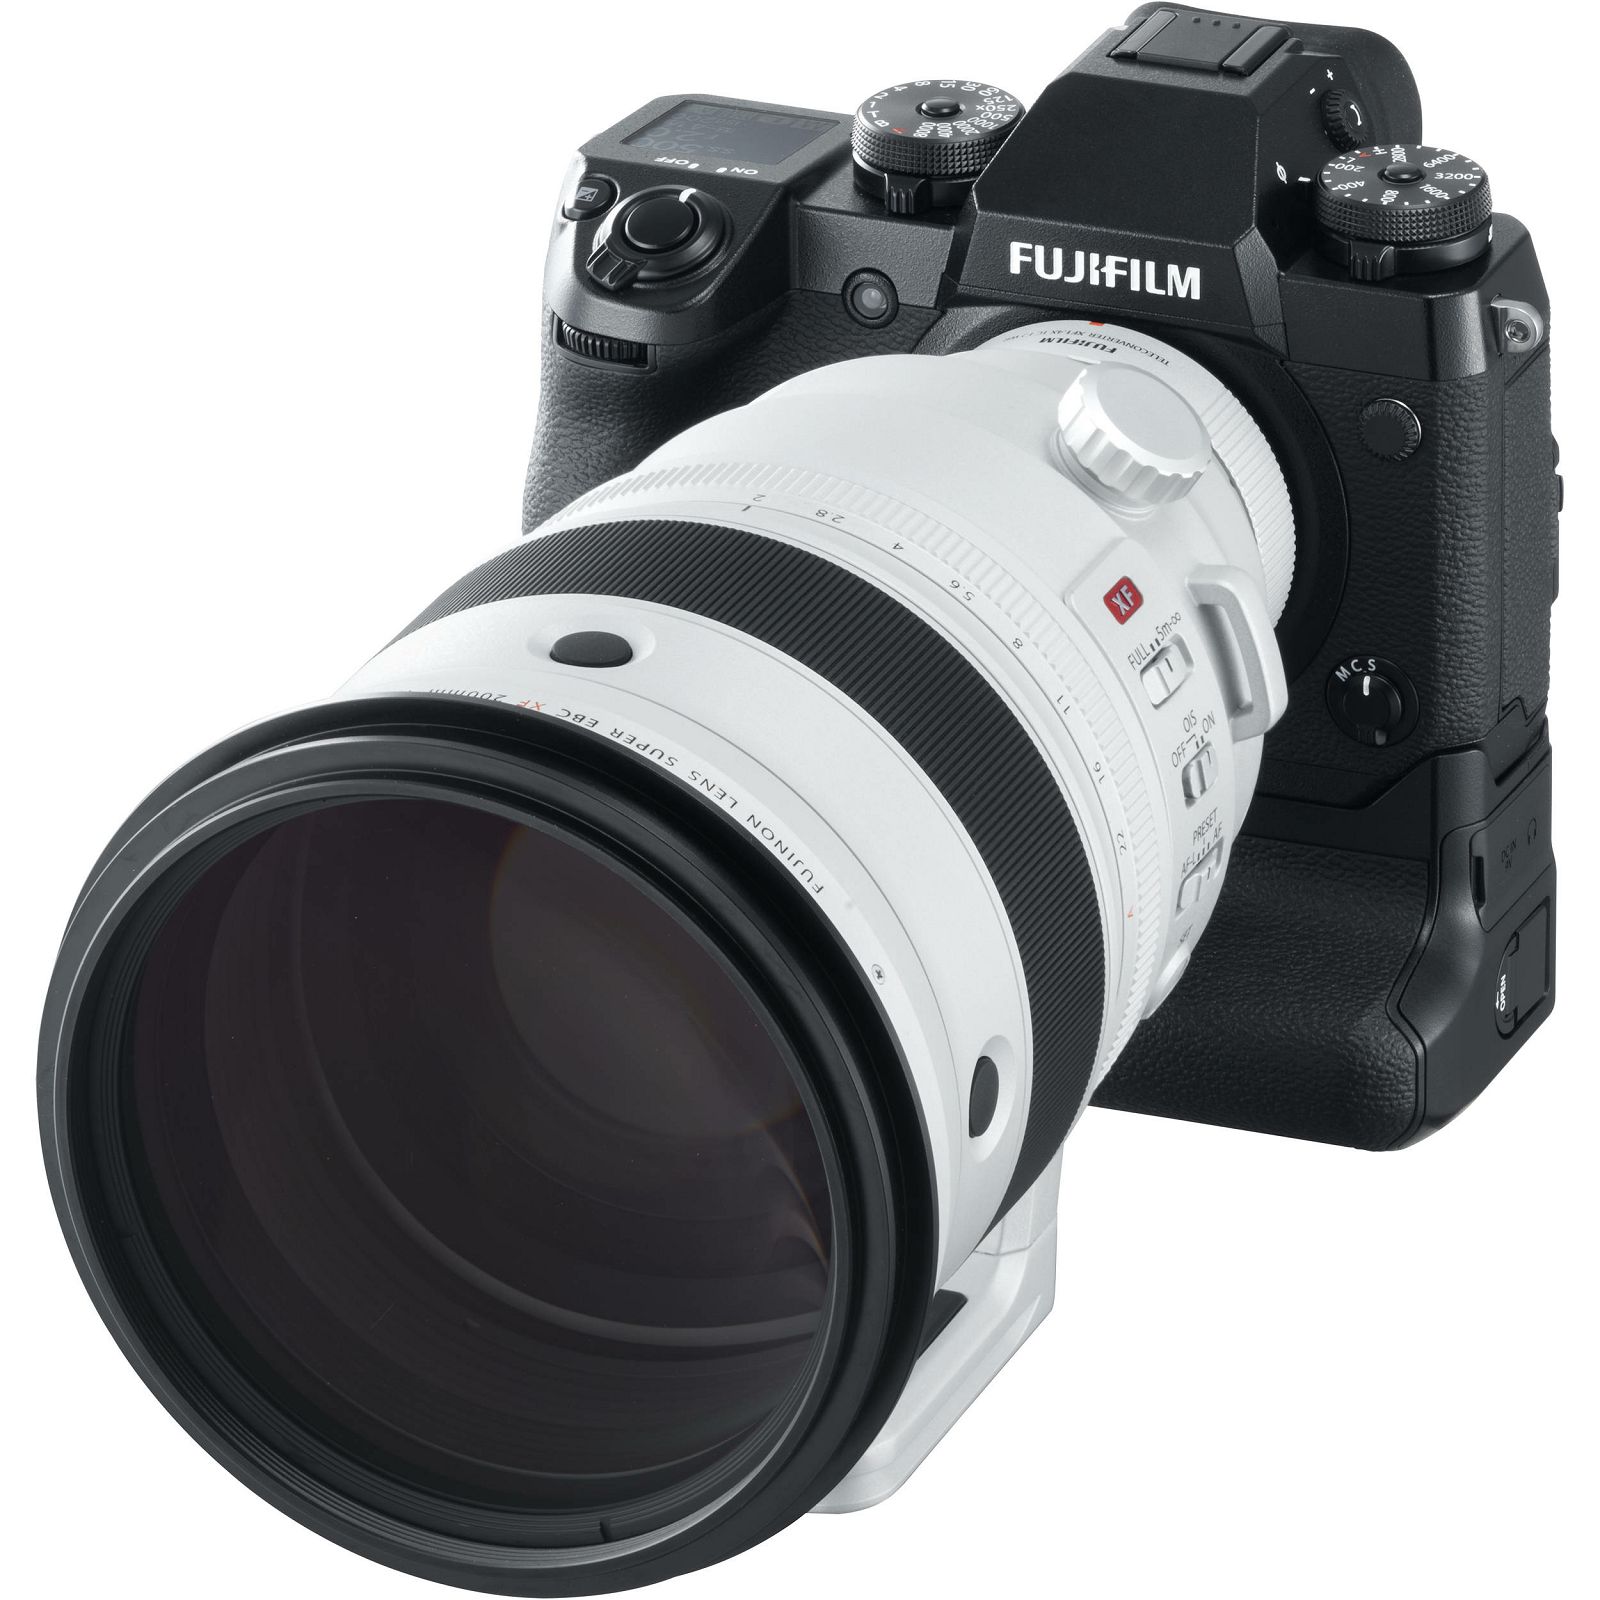 Fujifilm XF 200mm f/2 R LM OIS WR + teleconverter 1.4x TC F2 WR Fuji Fujinon 200 2.0 F2 telefoto objektiv fiksne žarišne duljine Fixed prime lens